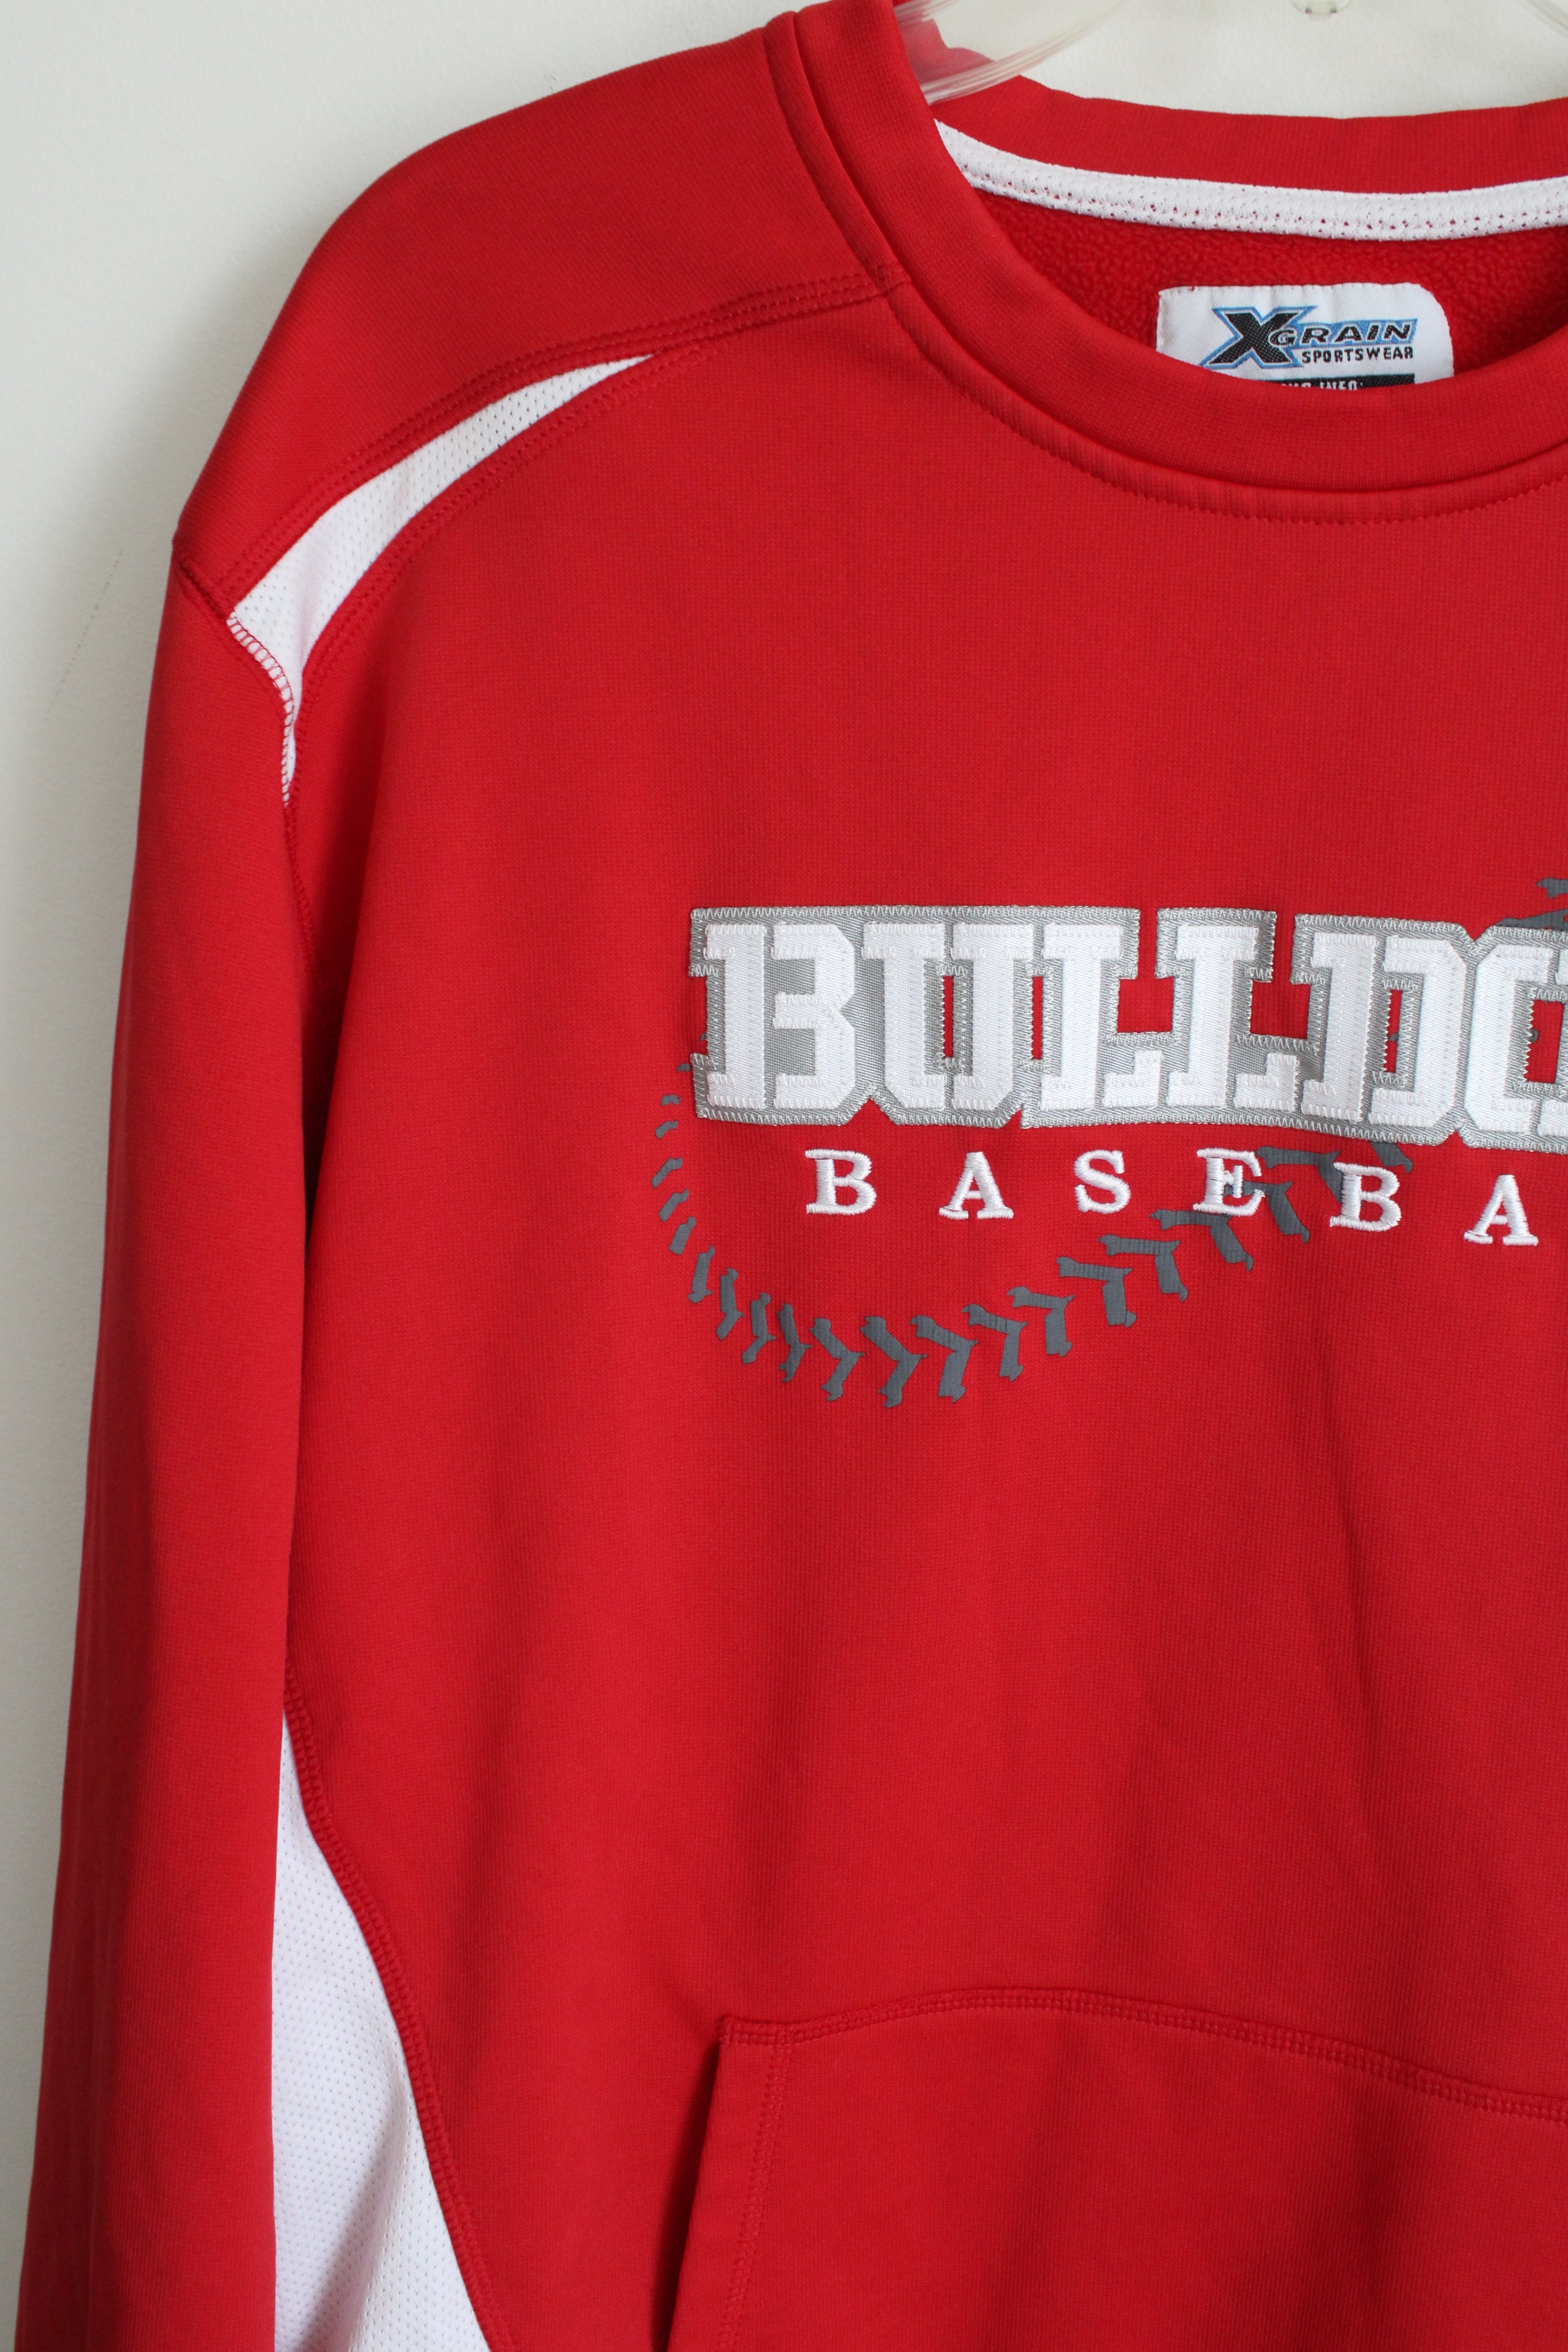 XGrain Gardner-Webb University Bulldogs Baseball Red Fleece Lined Sweatshirt | XL